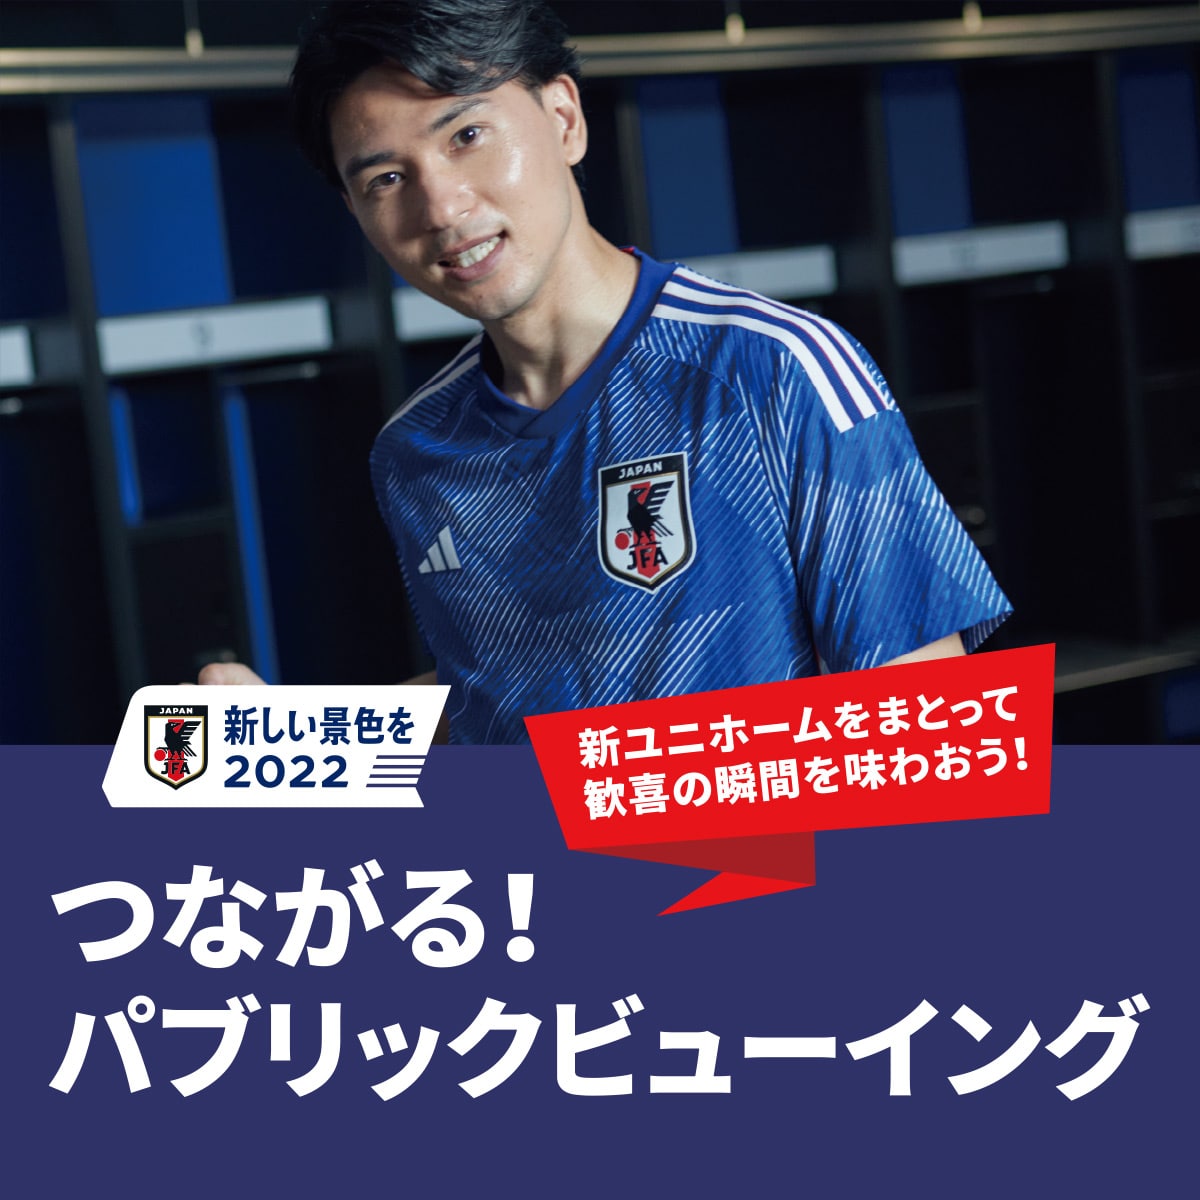 Adidas サッカー日本代表 パブリックビューイングご招待 キャンペーン サッカーショップkamo サッカーショップkamo